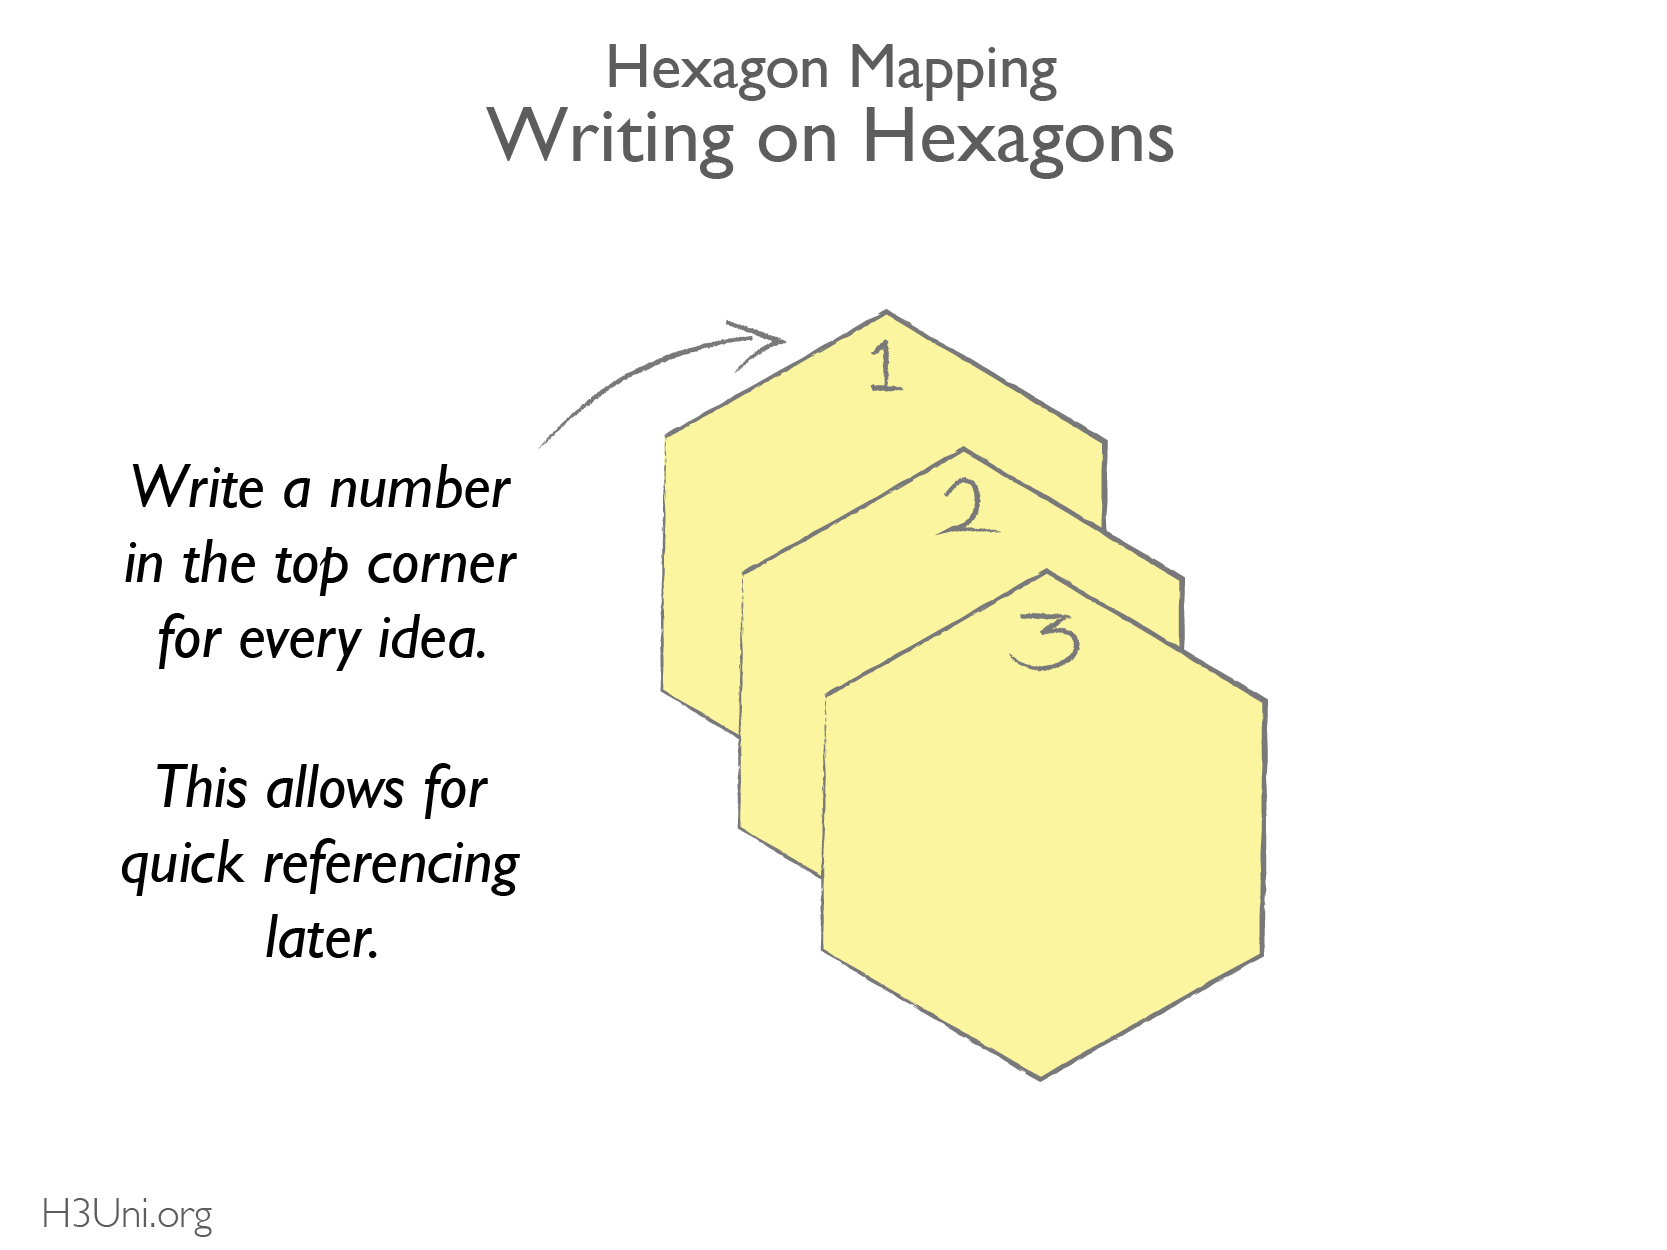 Writing on hexagons